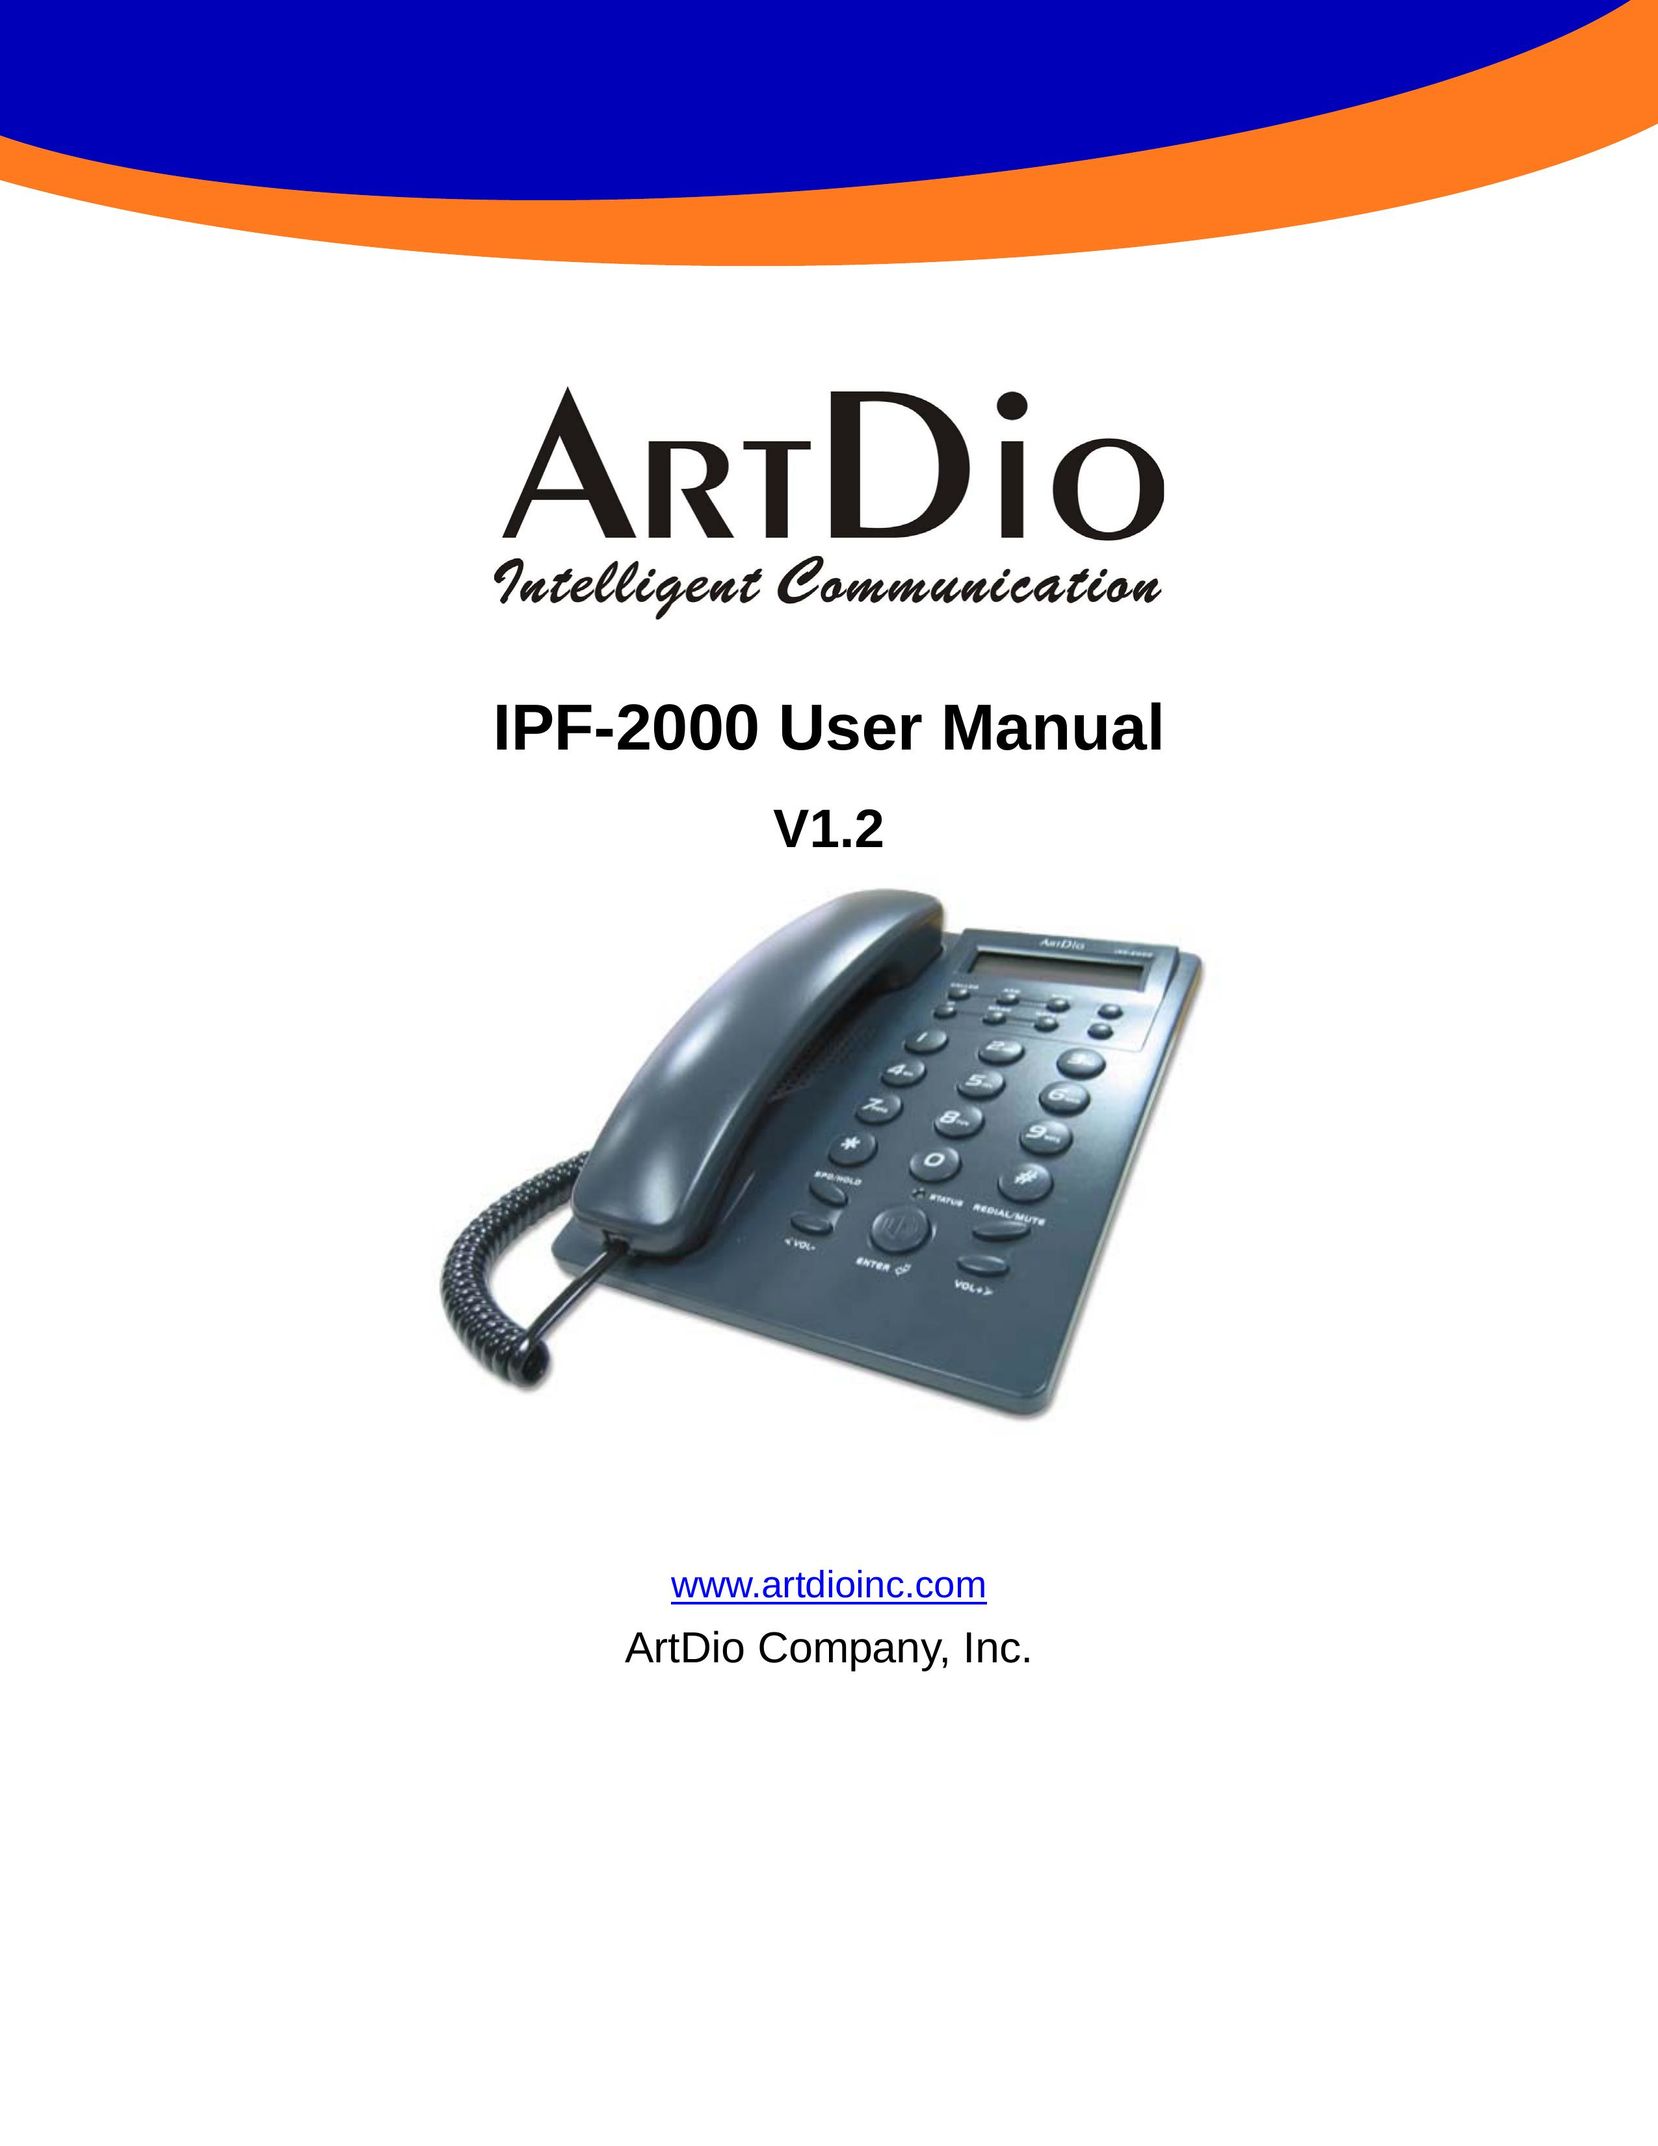 ArtDio IPF-2000 Telephone User Manual